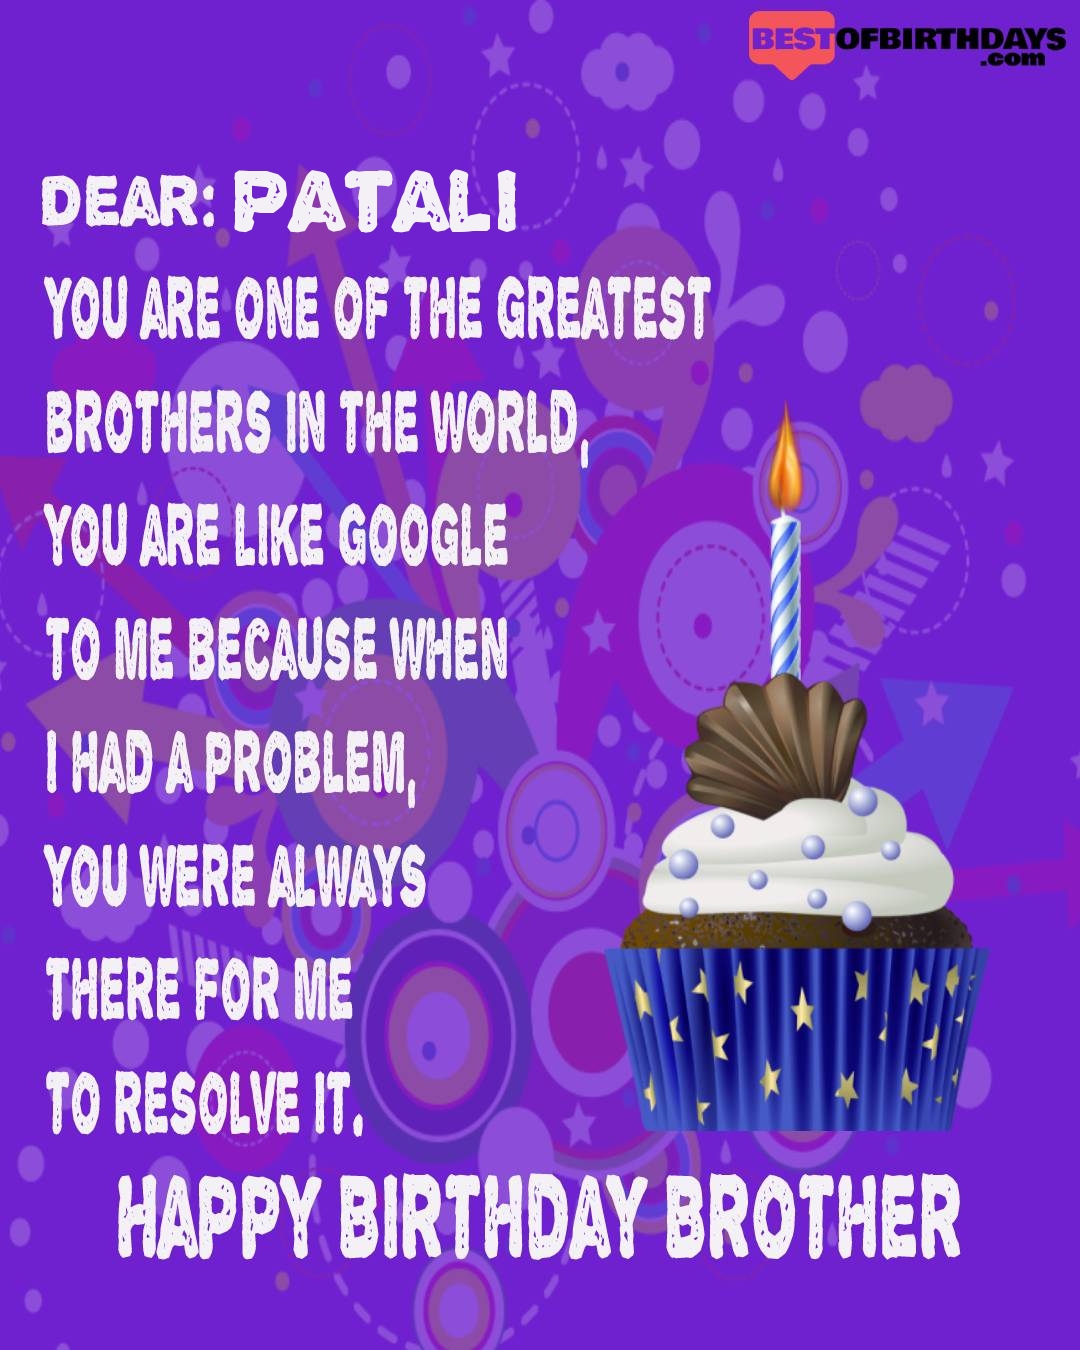 Happy birthday patali bhai brother bro